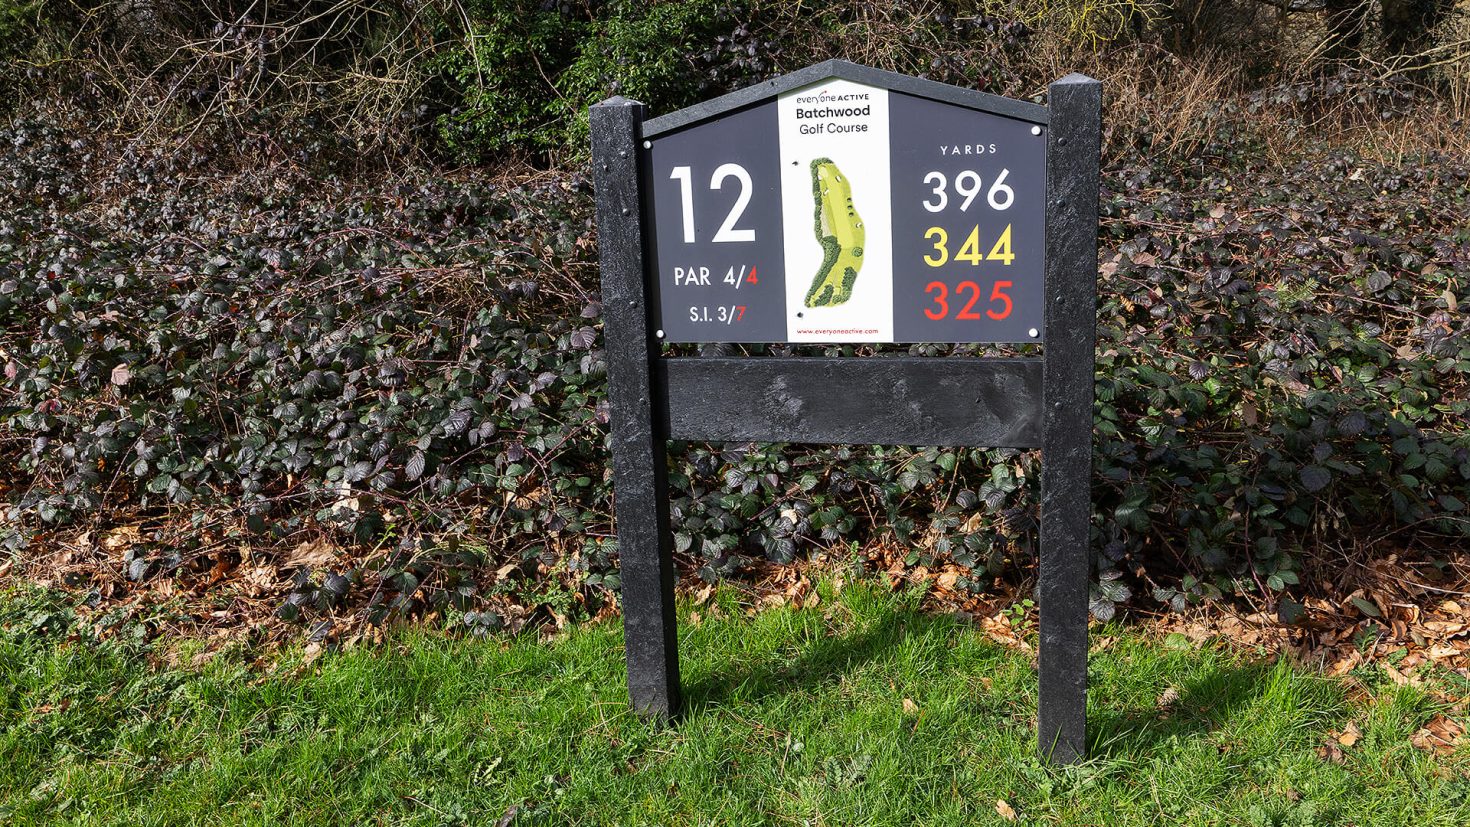 Batchwood Golf Course - Hole 12 Sign